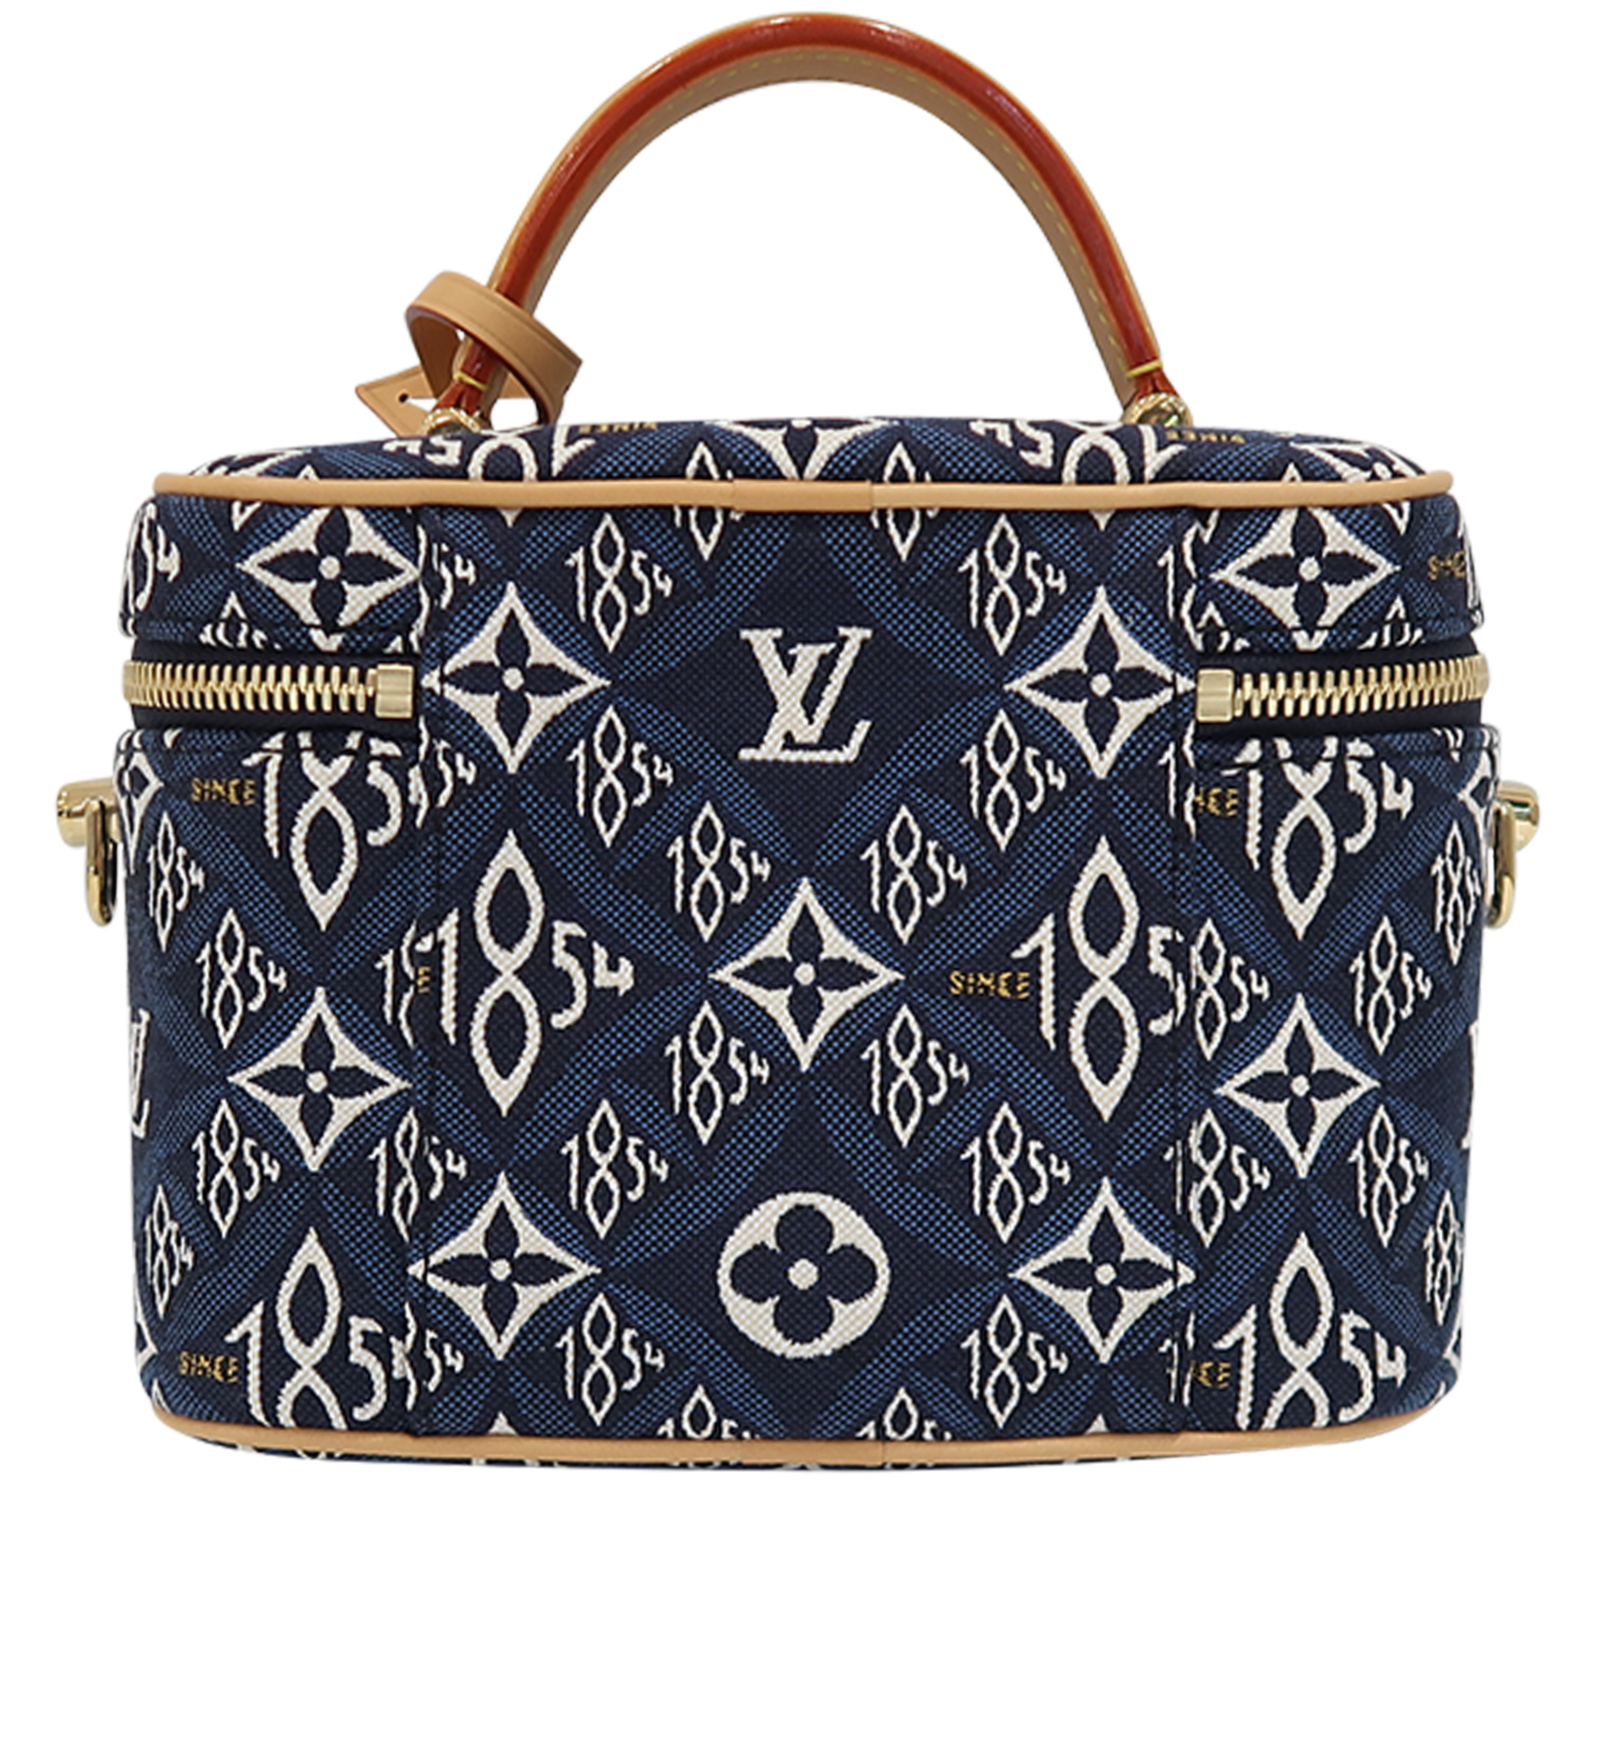 Louis Vuitton Since 1854 Vanity Pm in Blue